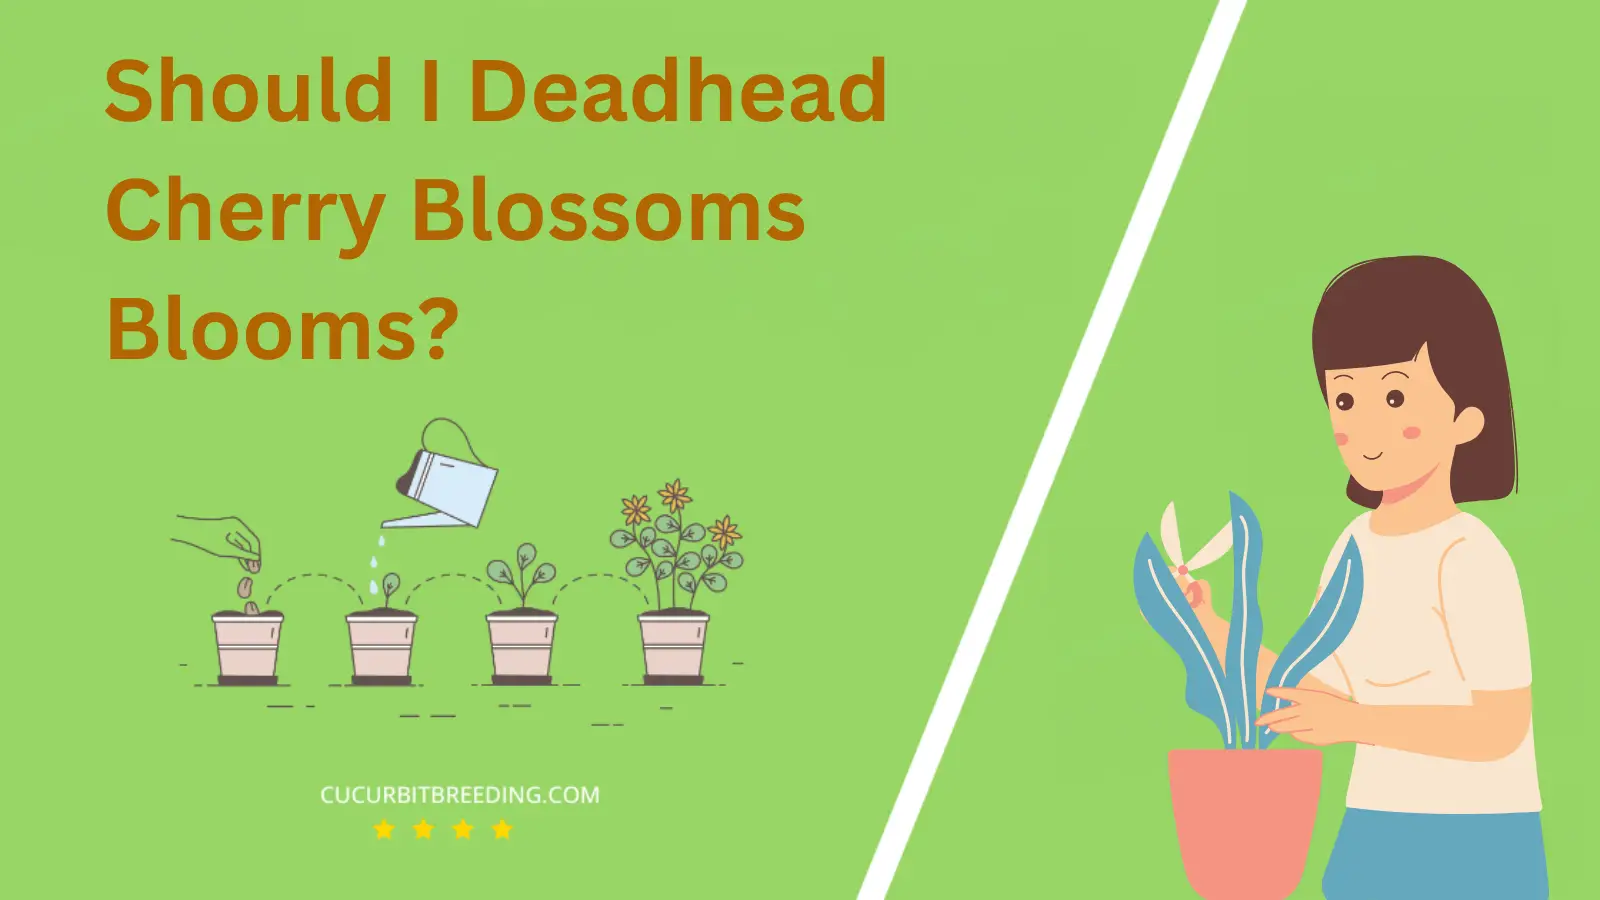 Should I Deadhead Cherry Blossoms Blooms?